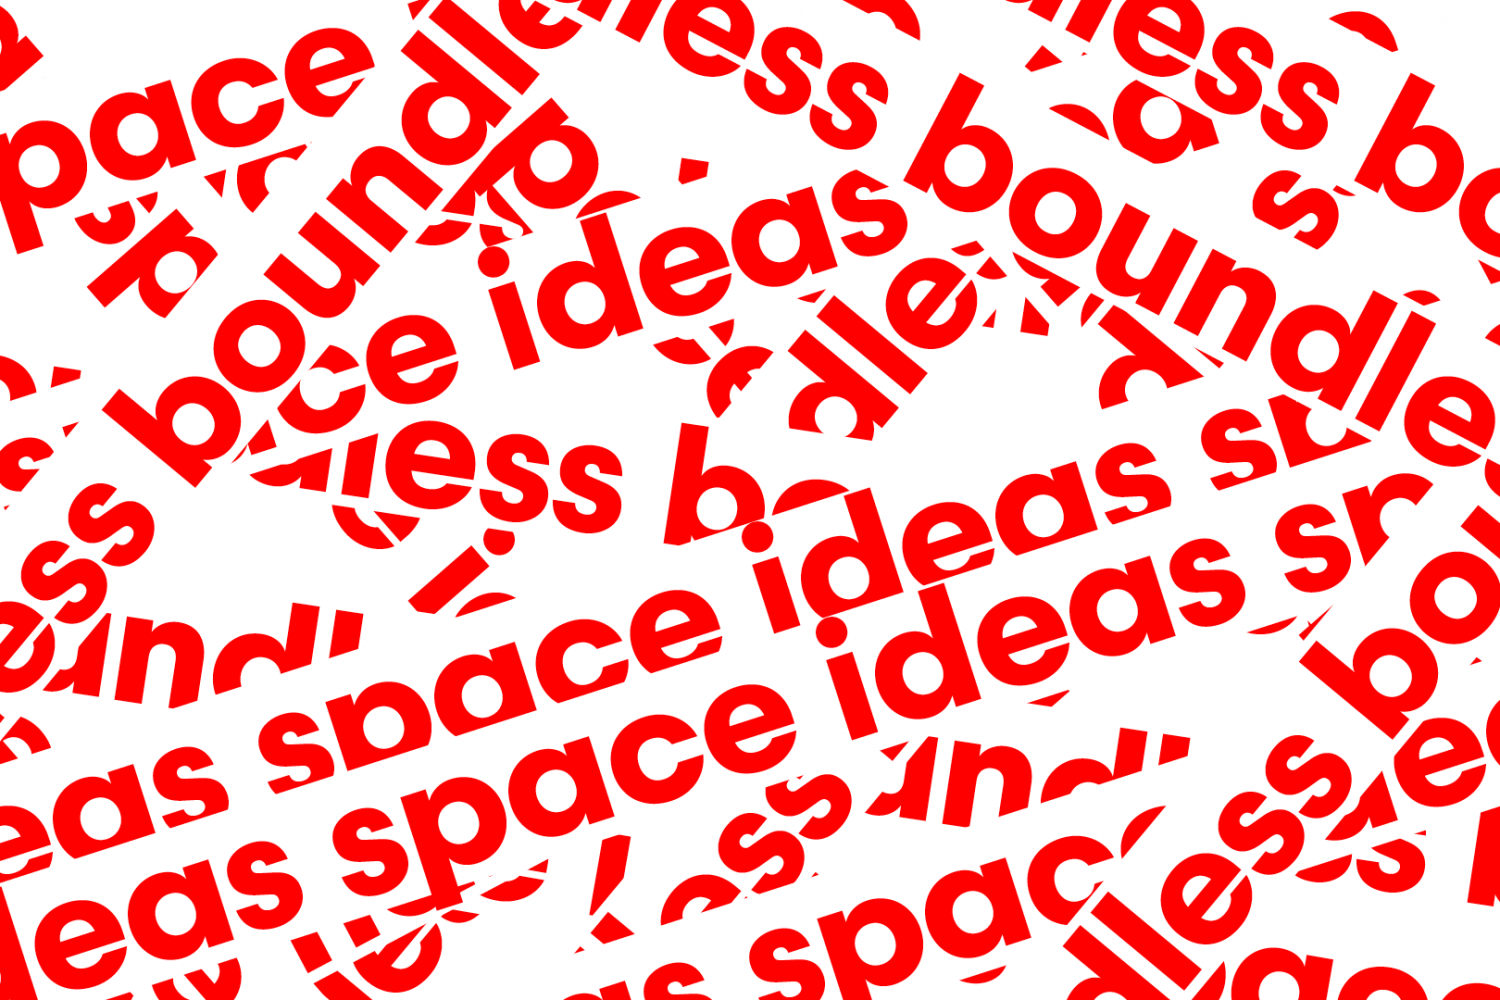 Boundless Ideas Space Artwork